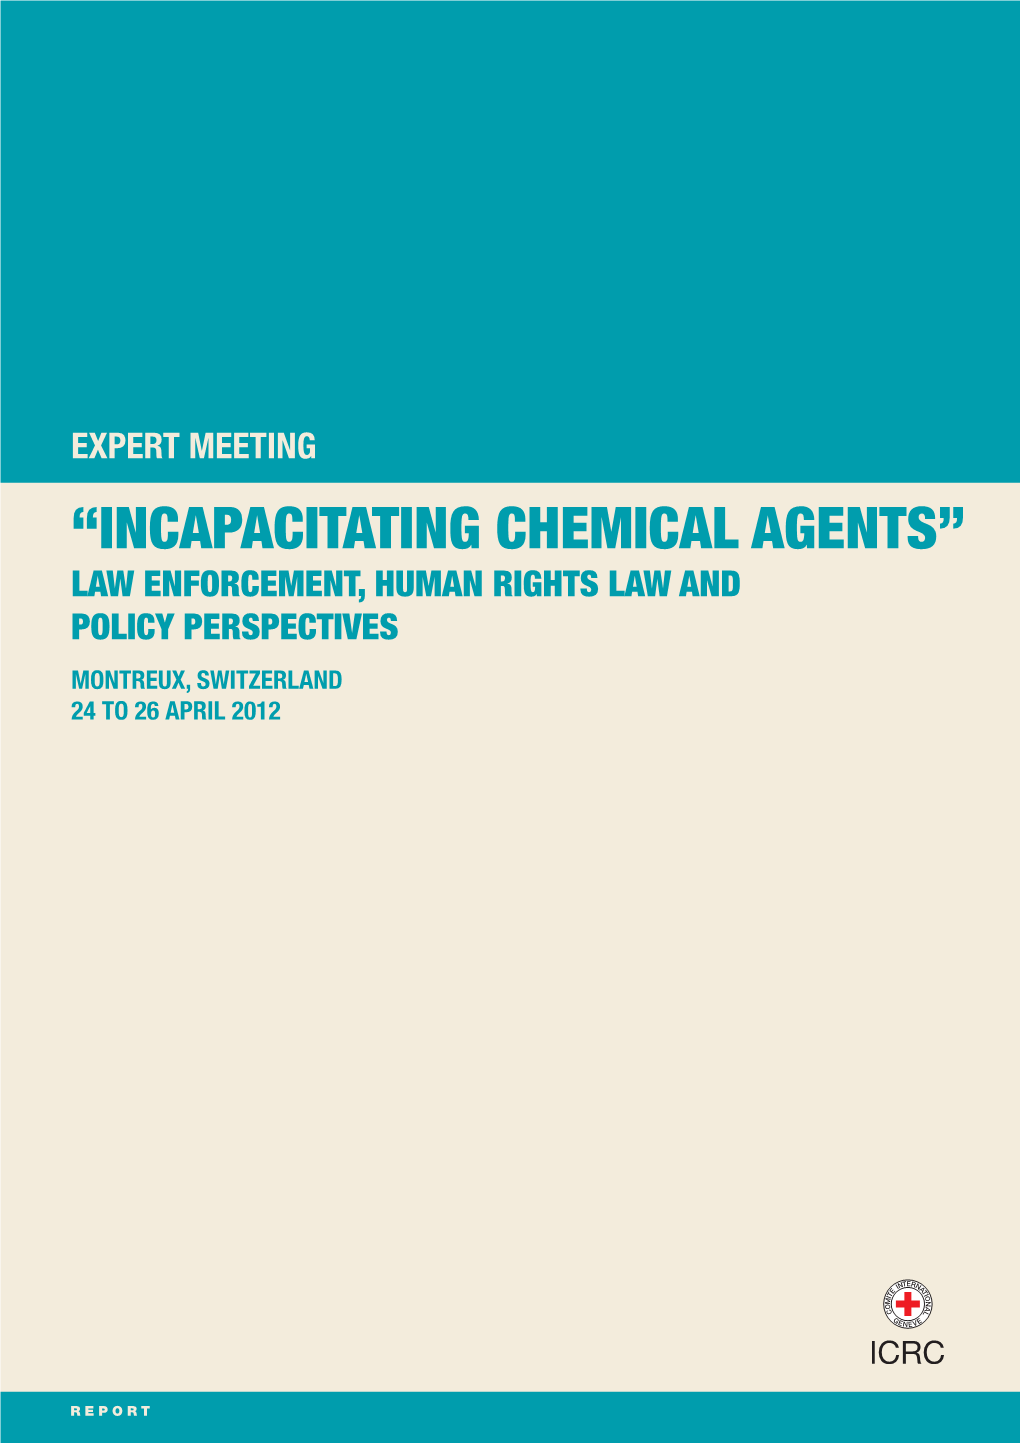 Incapacitating Chemical Agents